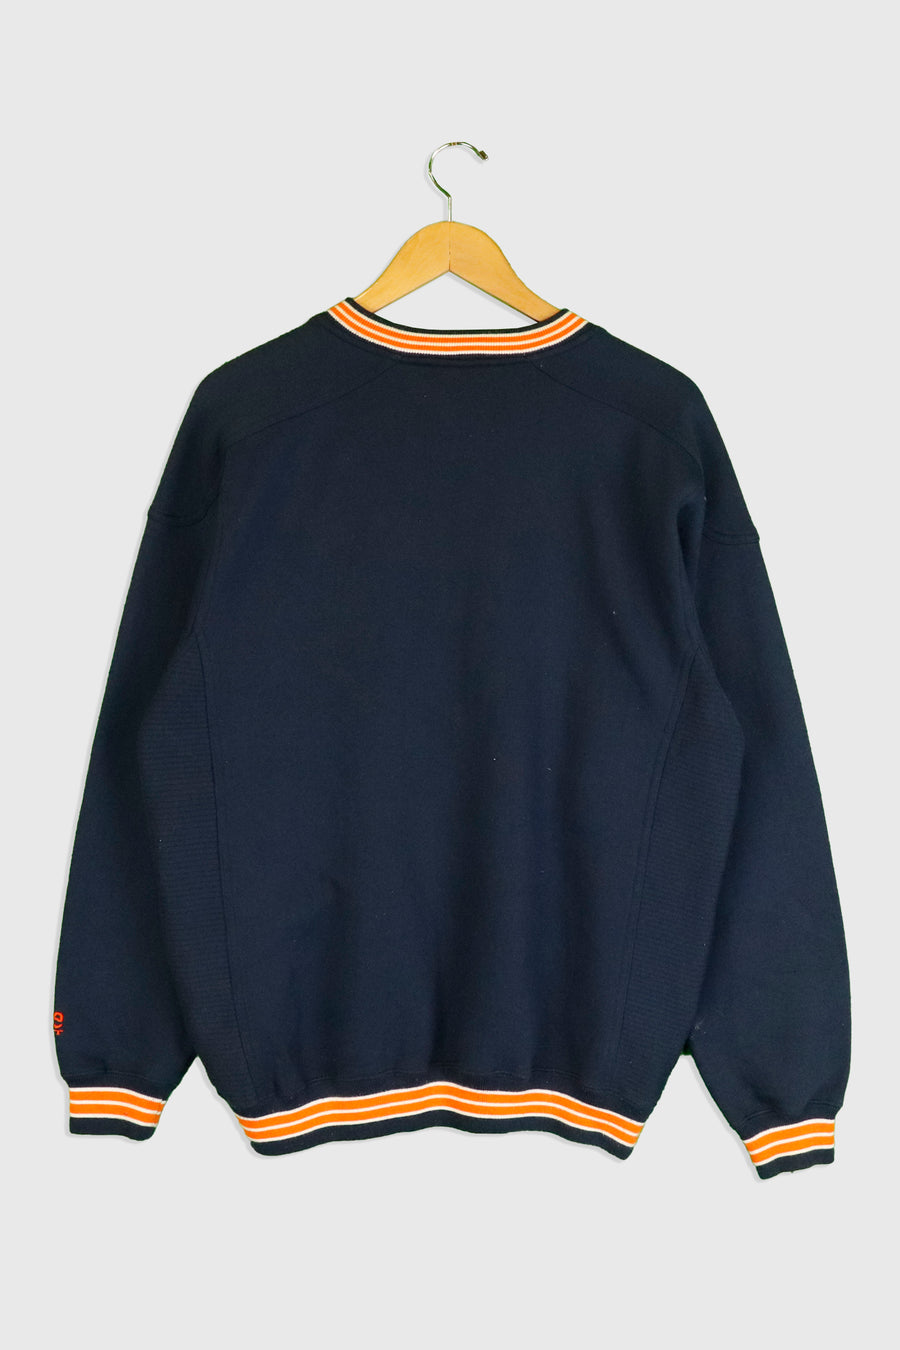 Vintage Syracuse Orangemen Ny Crewneck Sweatshirt Sz M